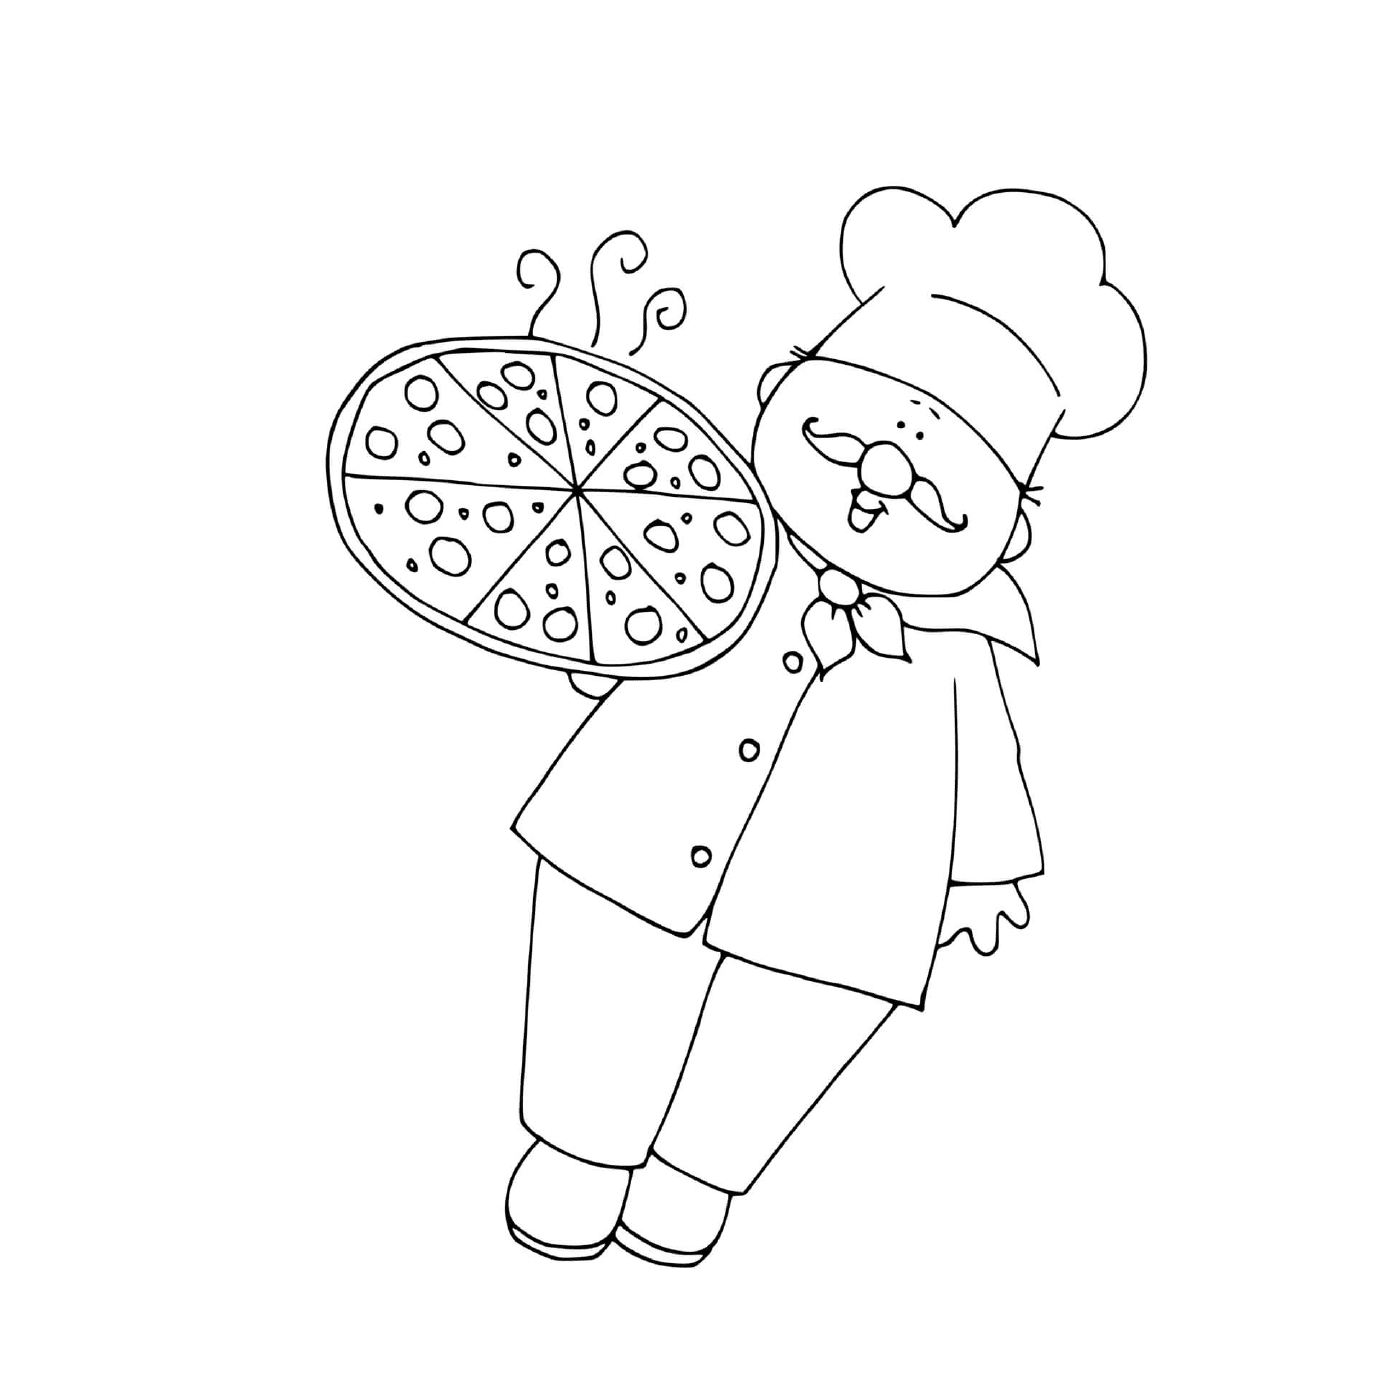  A pizza chef 